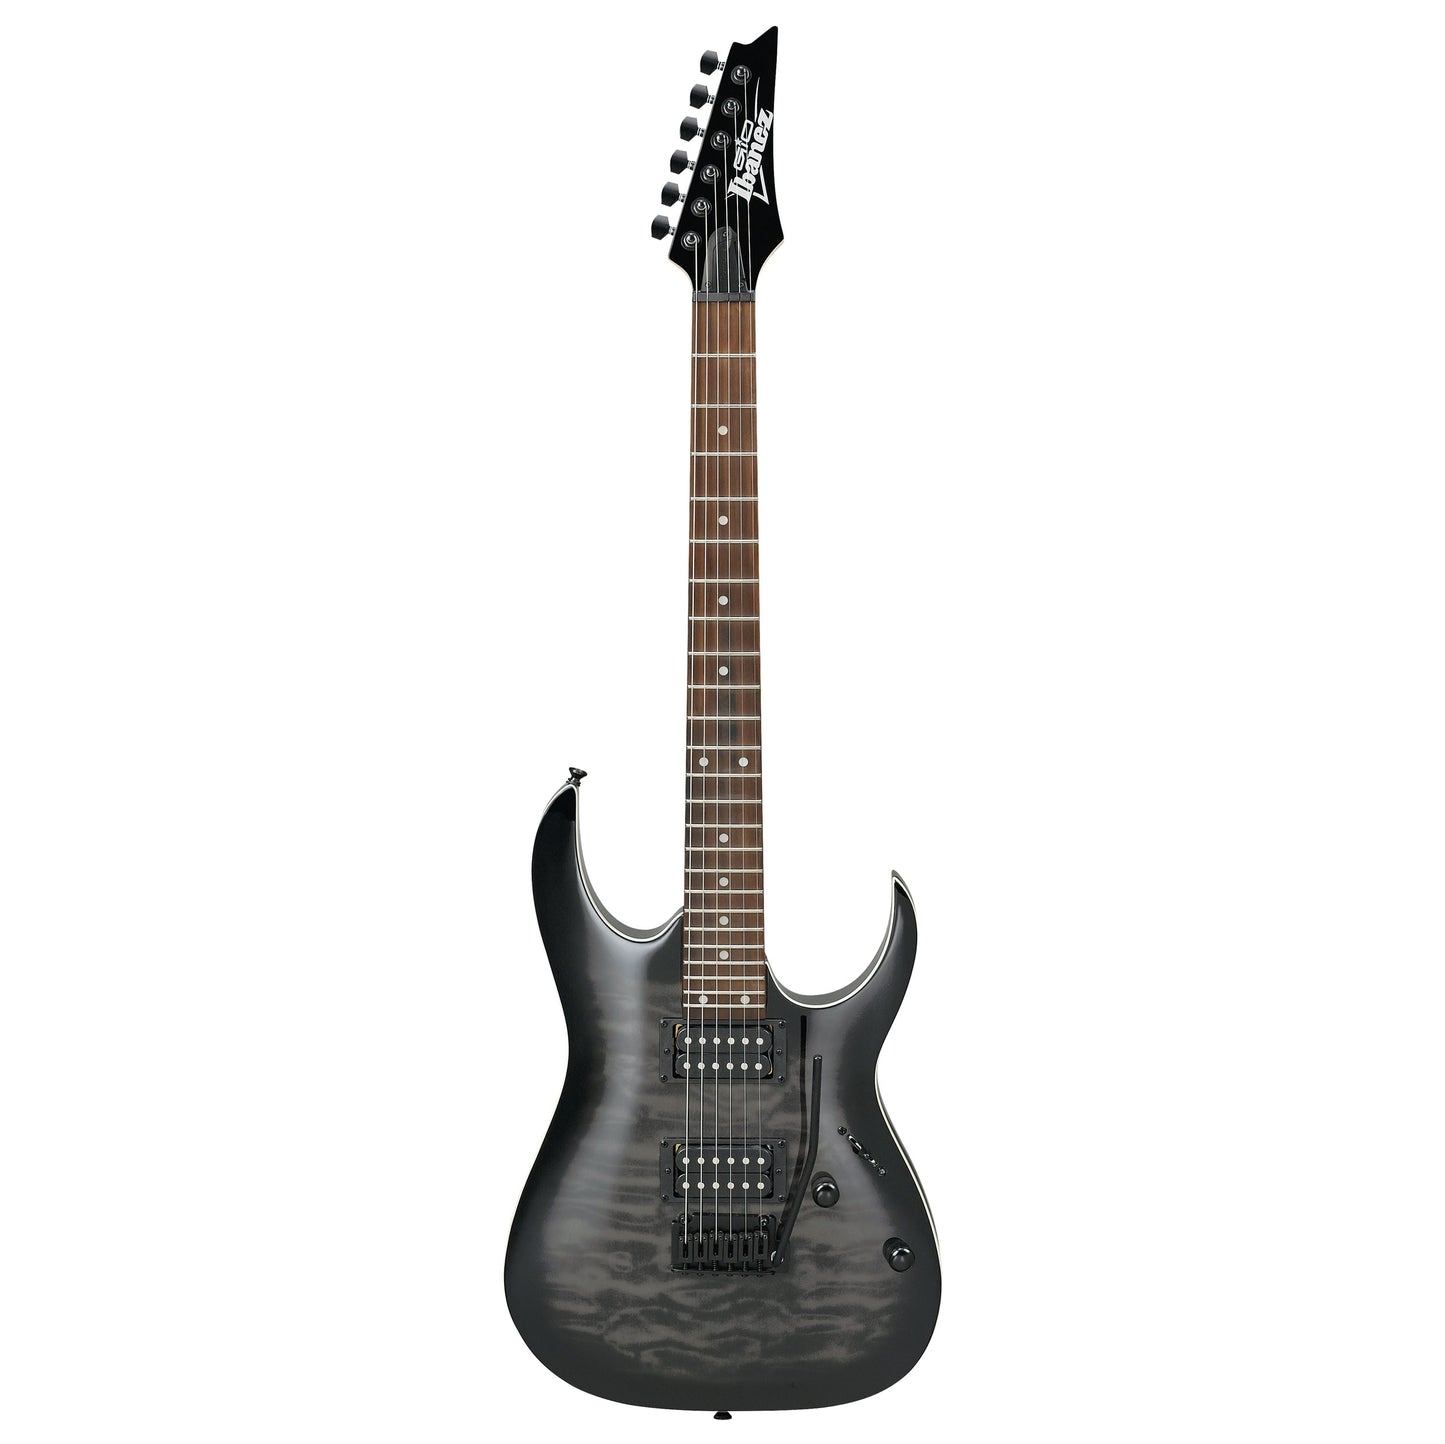 Ibanez GRGA123QATKS Rga Electric Guitar in Transparent Black Sunburst